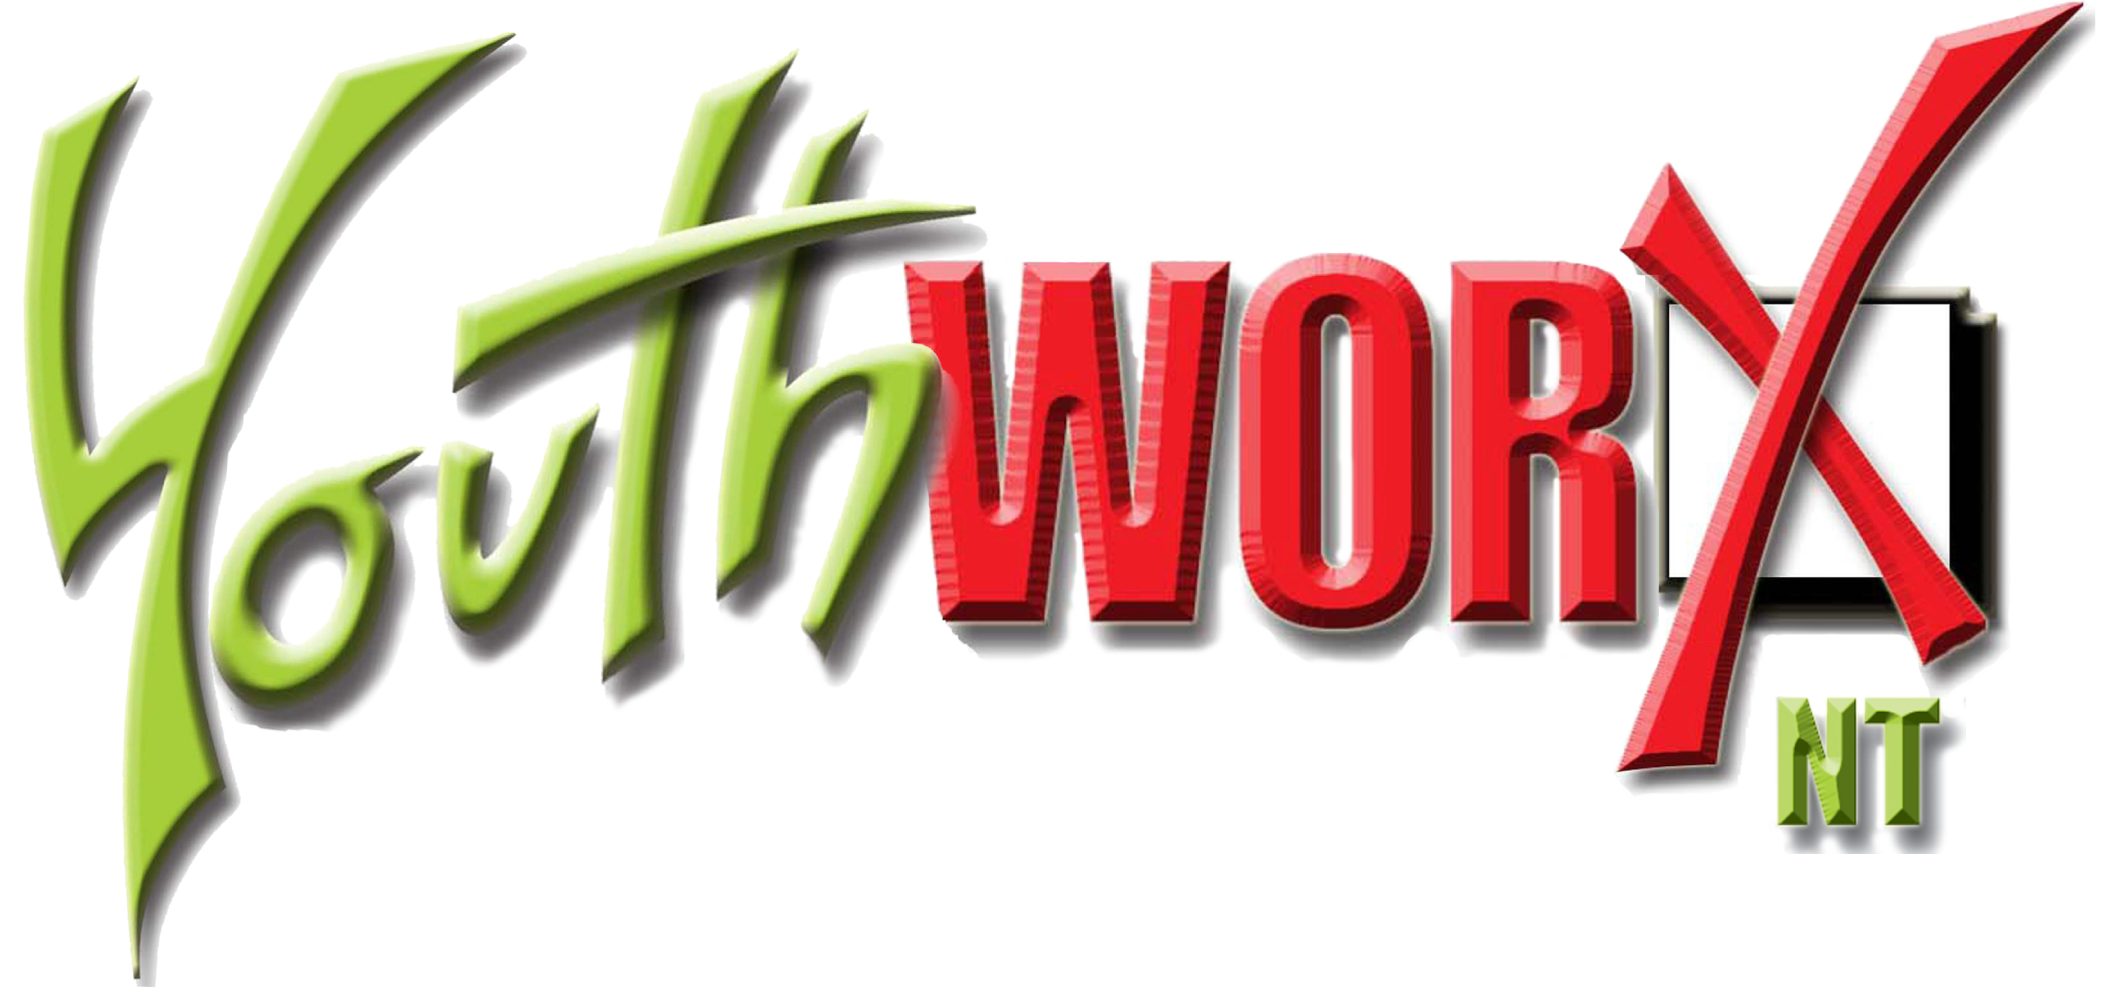 YouthWorX NT Logo